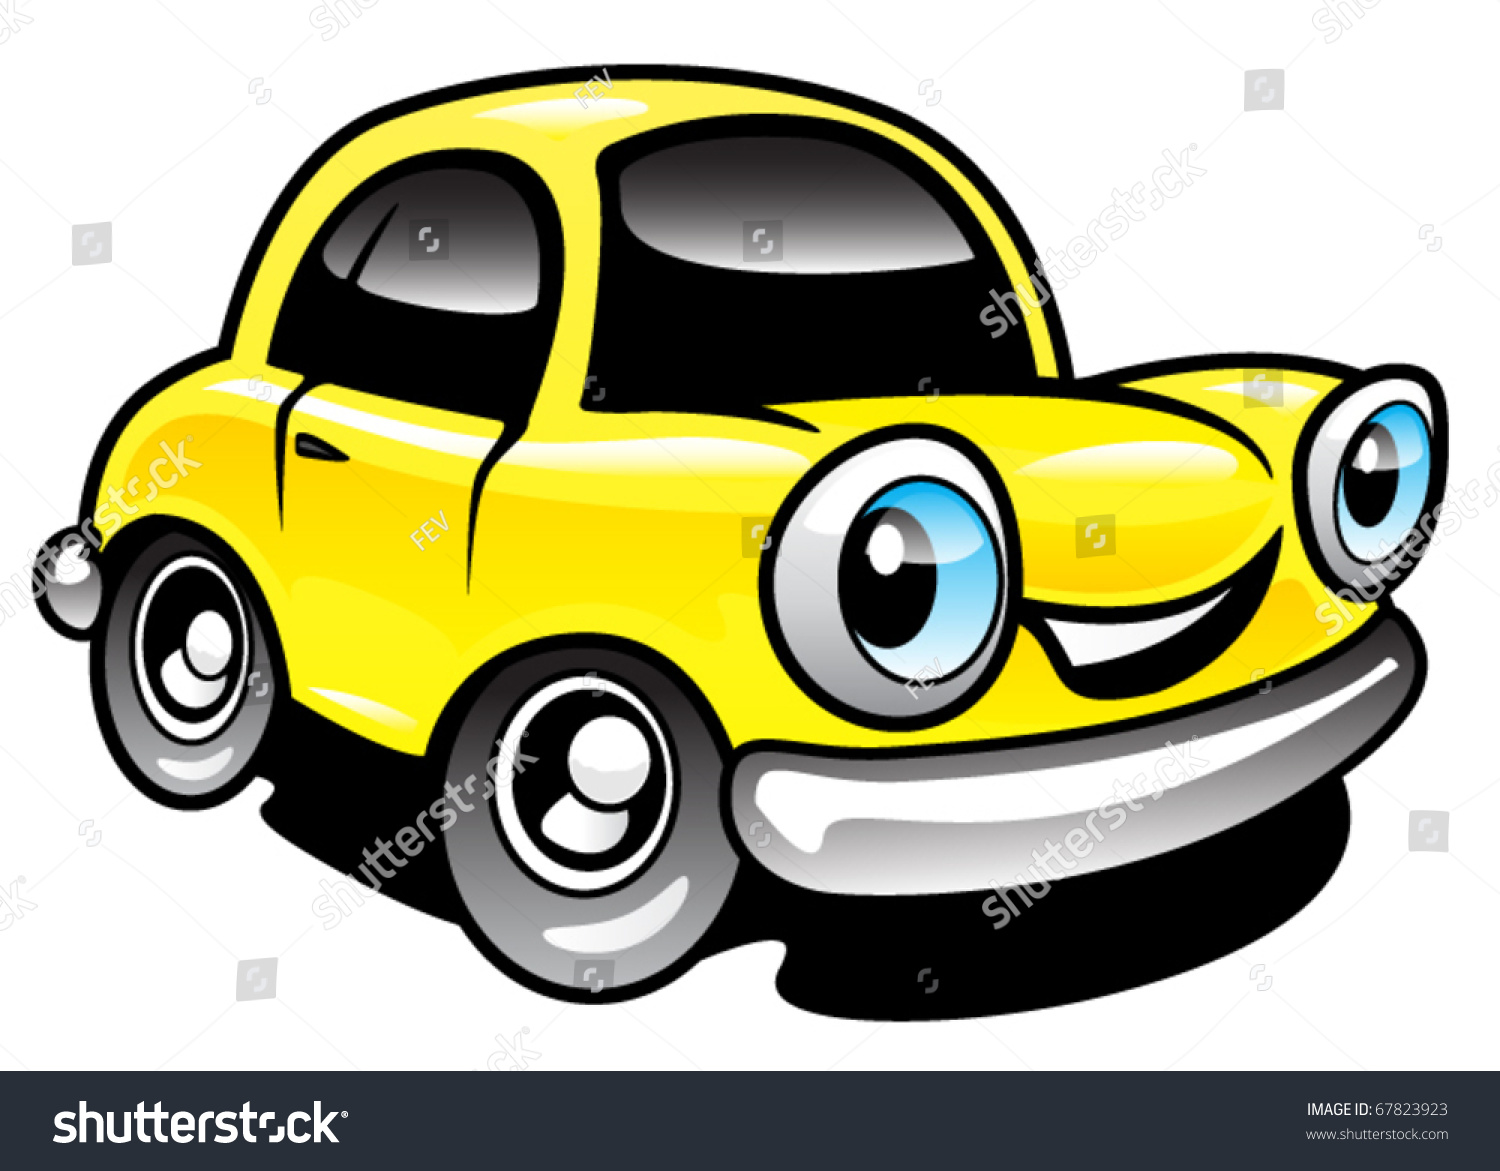 Cartoon Car Stock Vector 67823923  Shutterstock